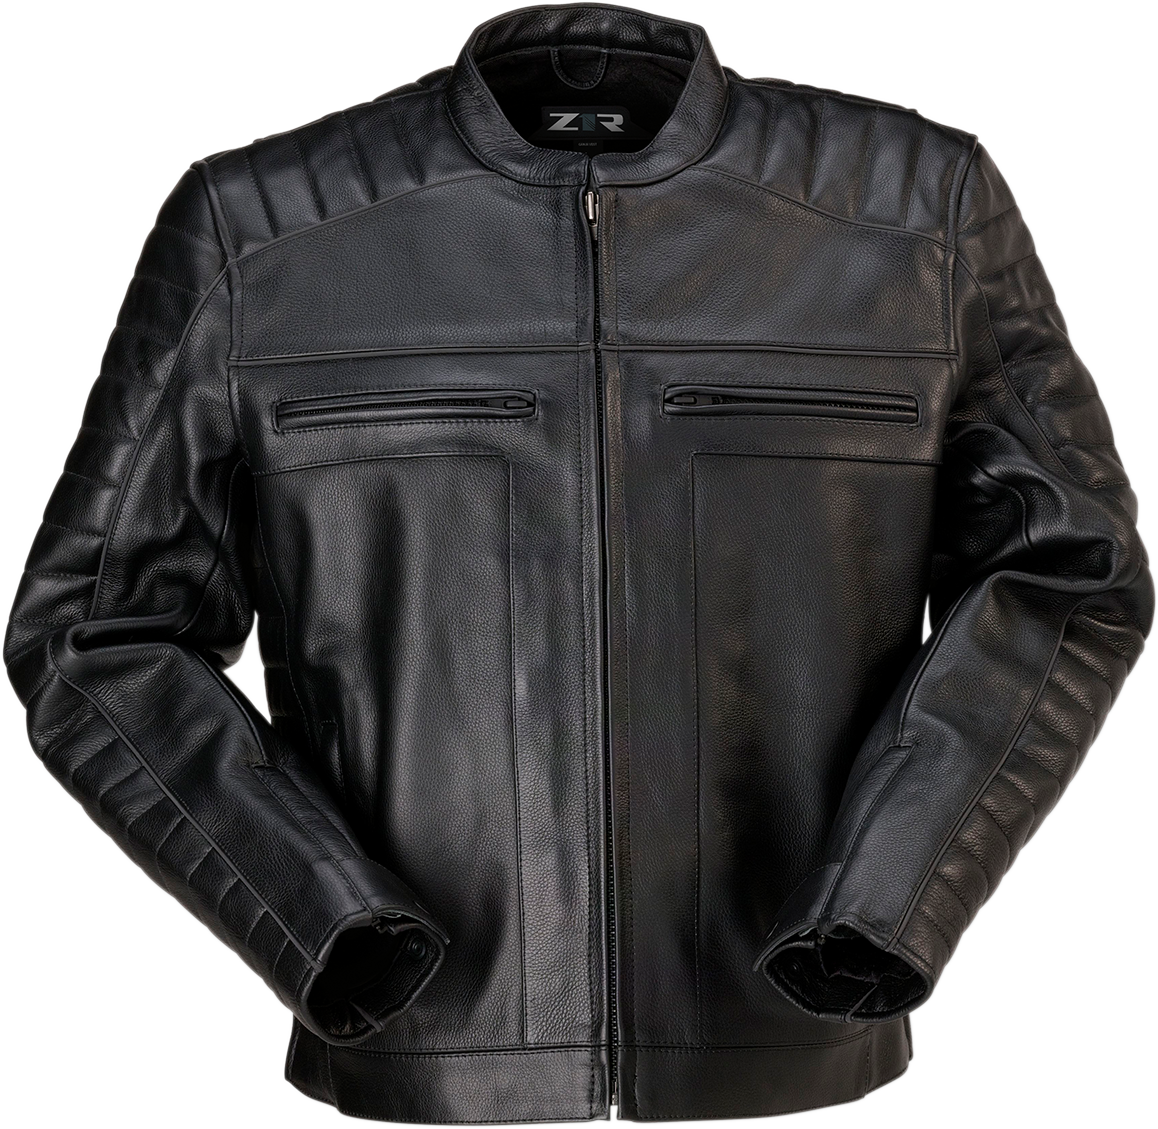 Z1R Artillery Leather Jacket - Black - XL 2810-3776